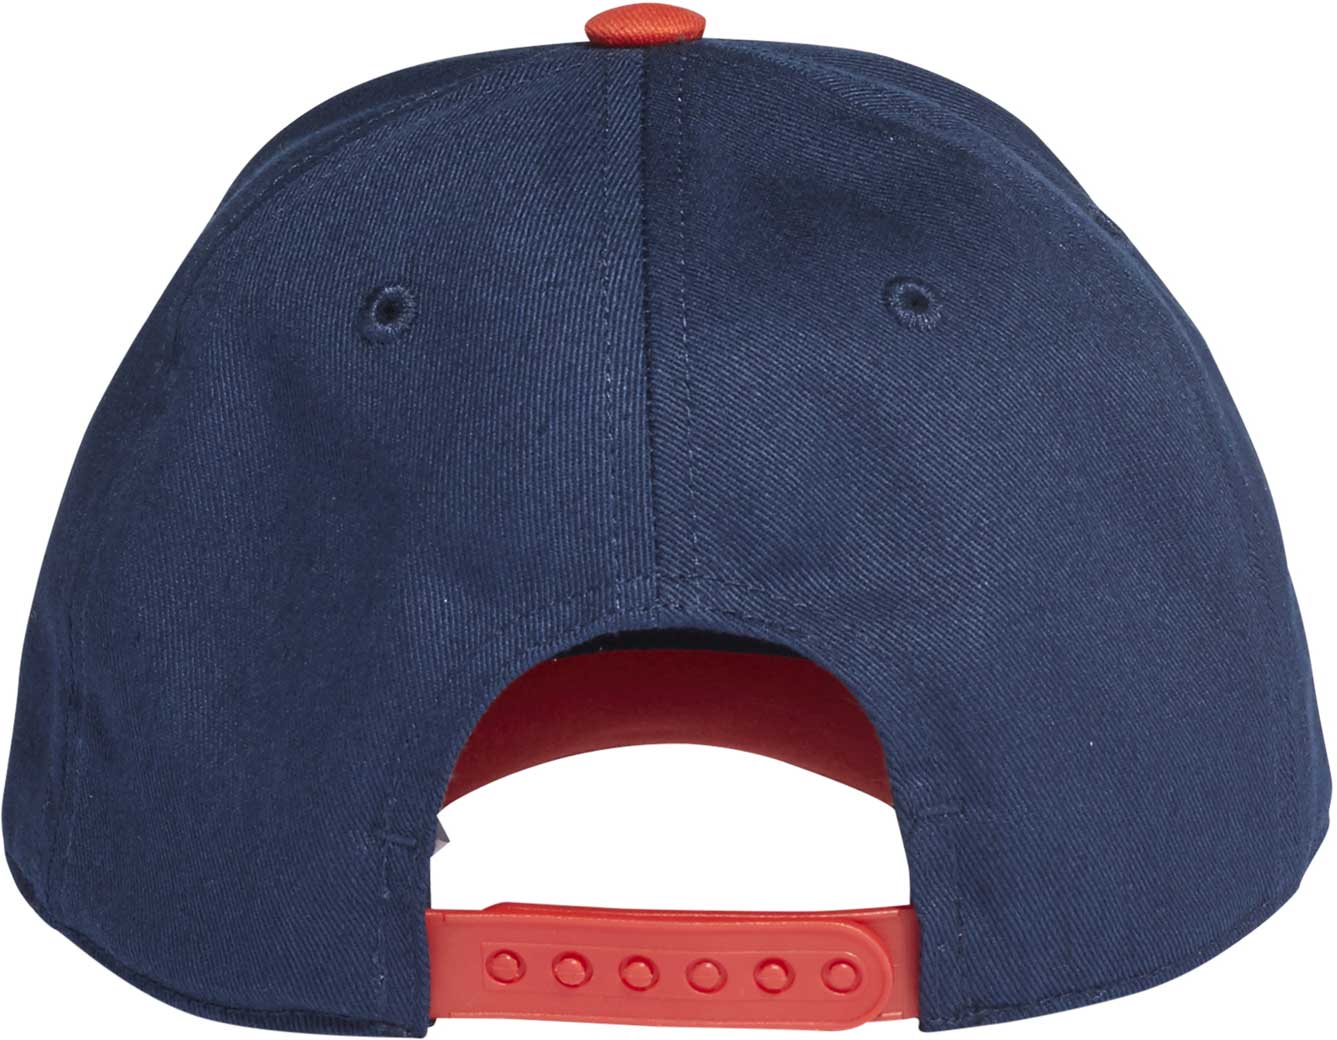 Kids' cap